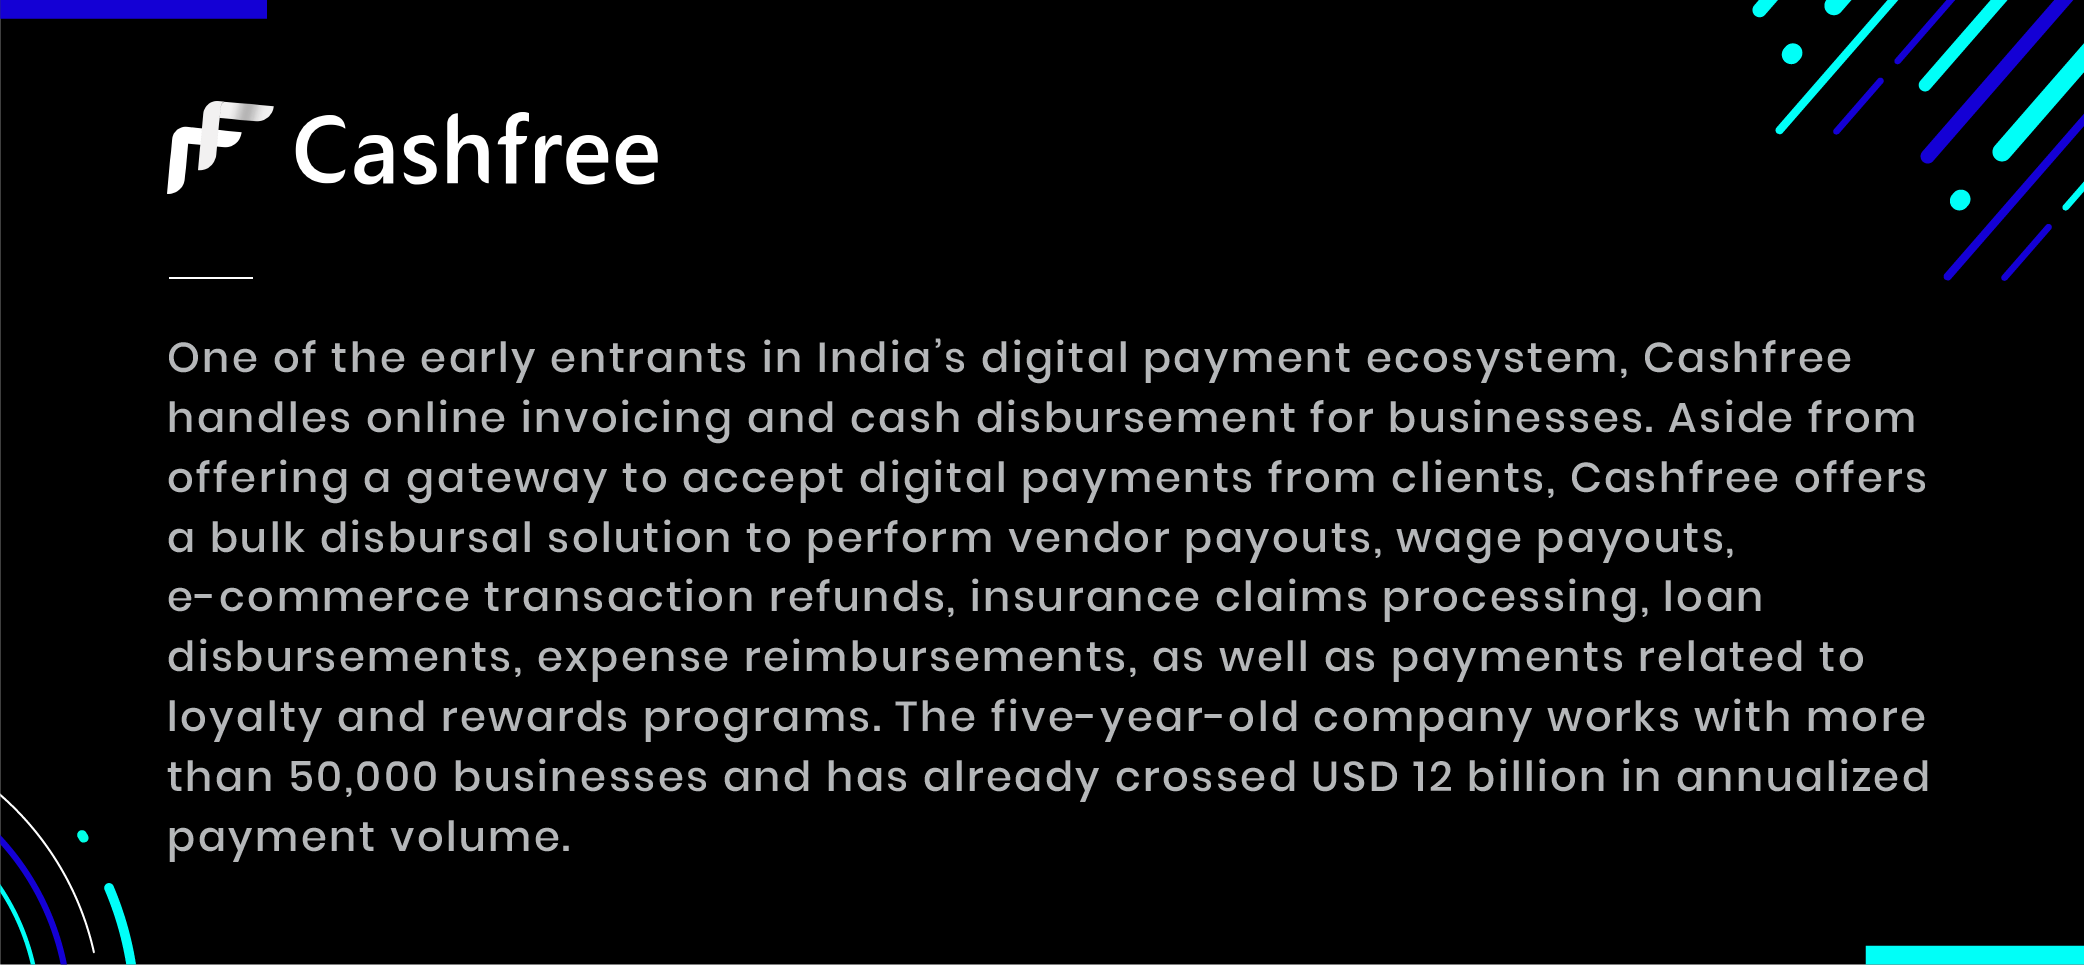 Cashfree india digital payment ecosystem online invoicing cash disbursement gateway vendor wage payouts reimbursements